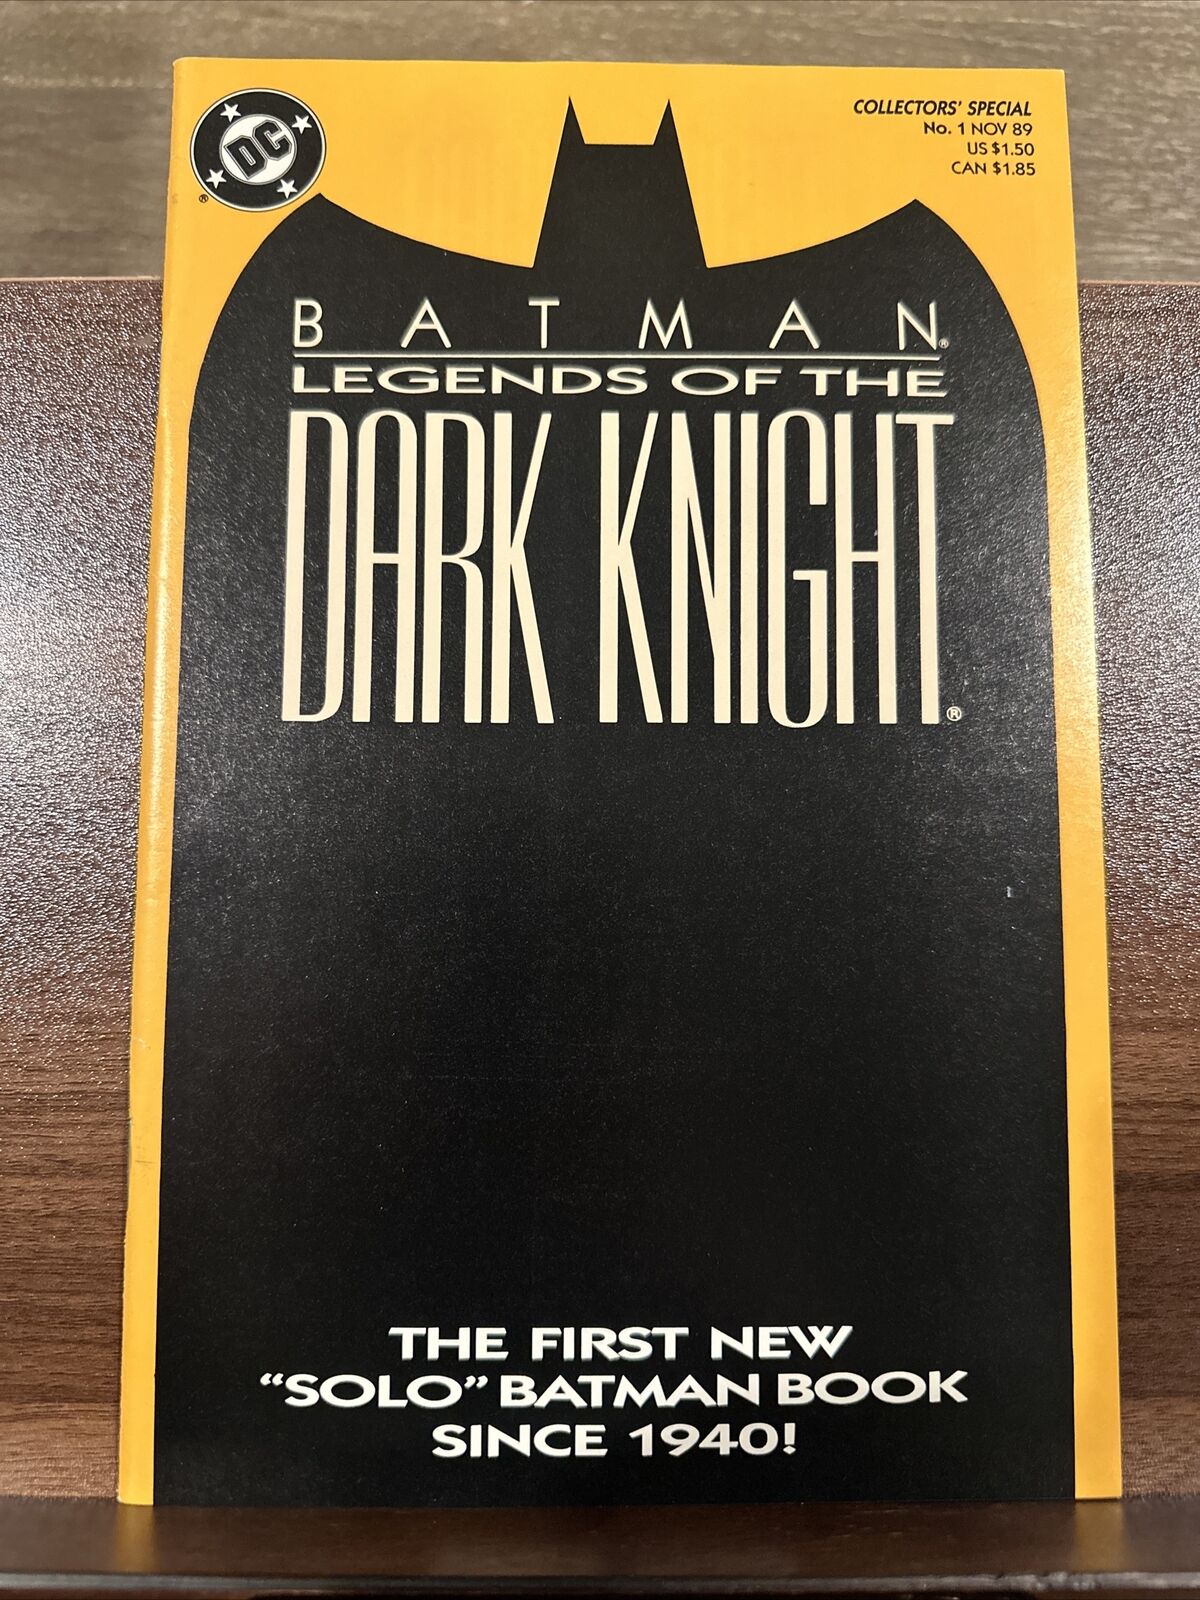 Batman: Legends of the Dark Knight #1 - Orange Cover Collectors' Special- 1989